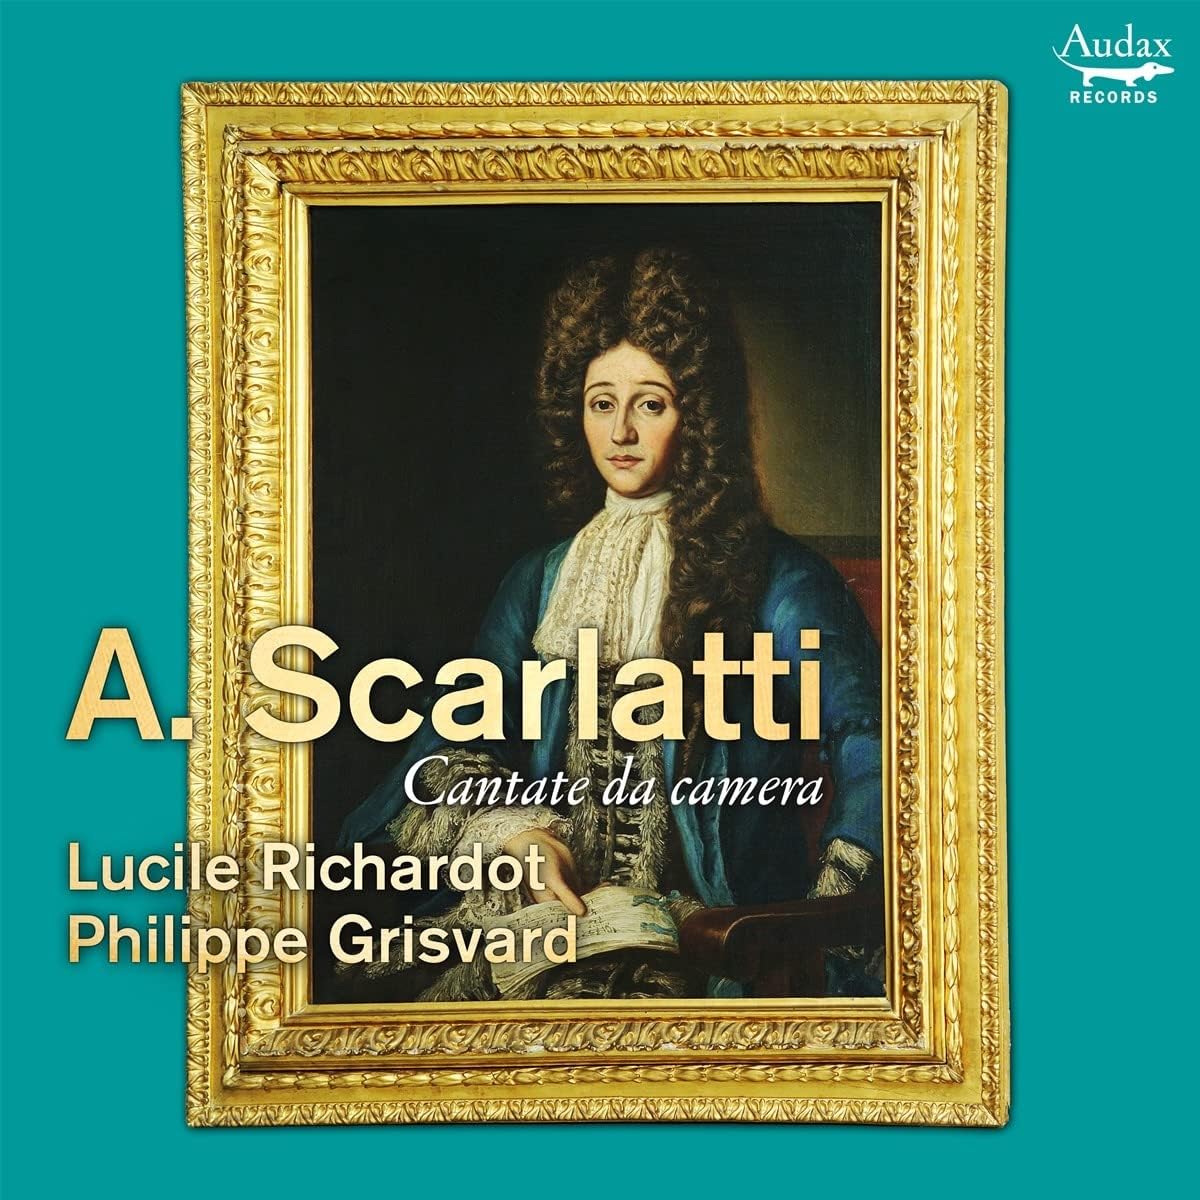 CD cover Scarlatti cantatas Richardot Grisvard